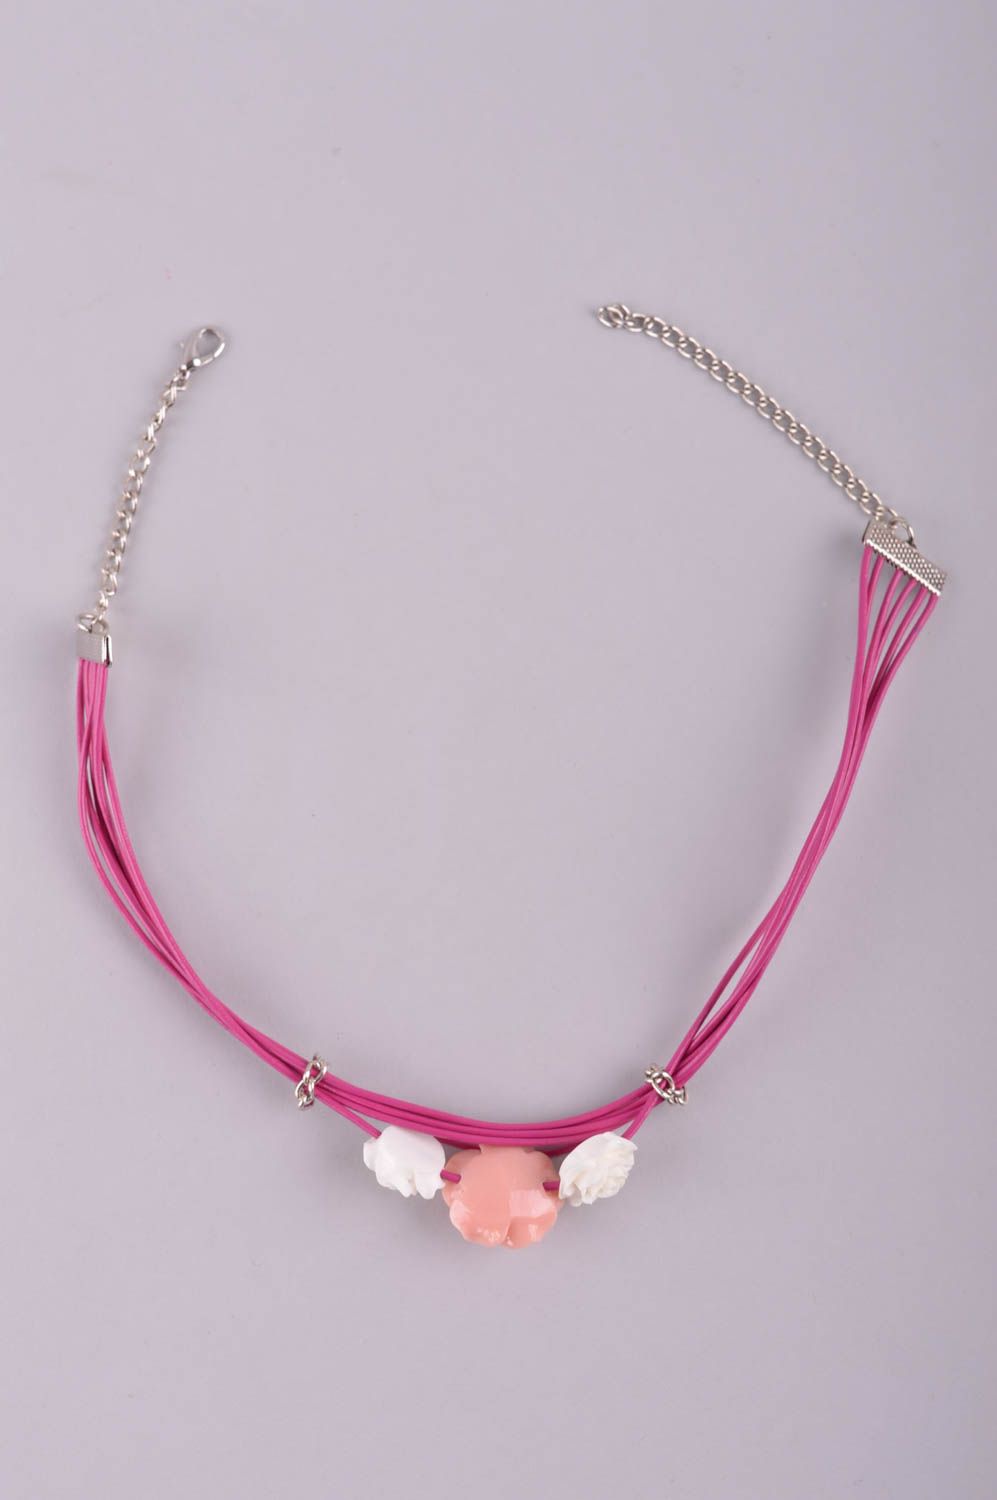 Handmade stylish accessory beautiful pink jewelry cute unusual present photo 5